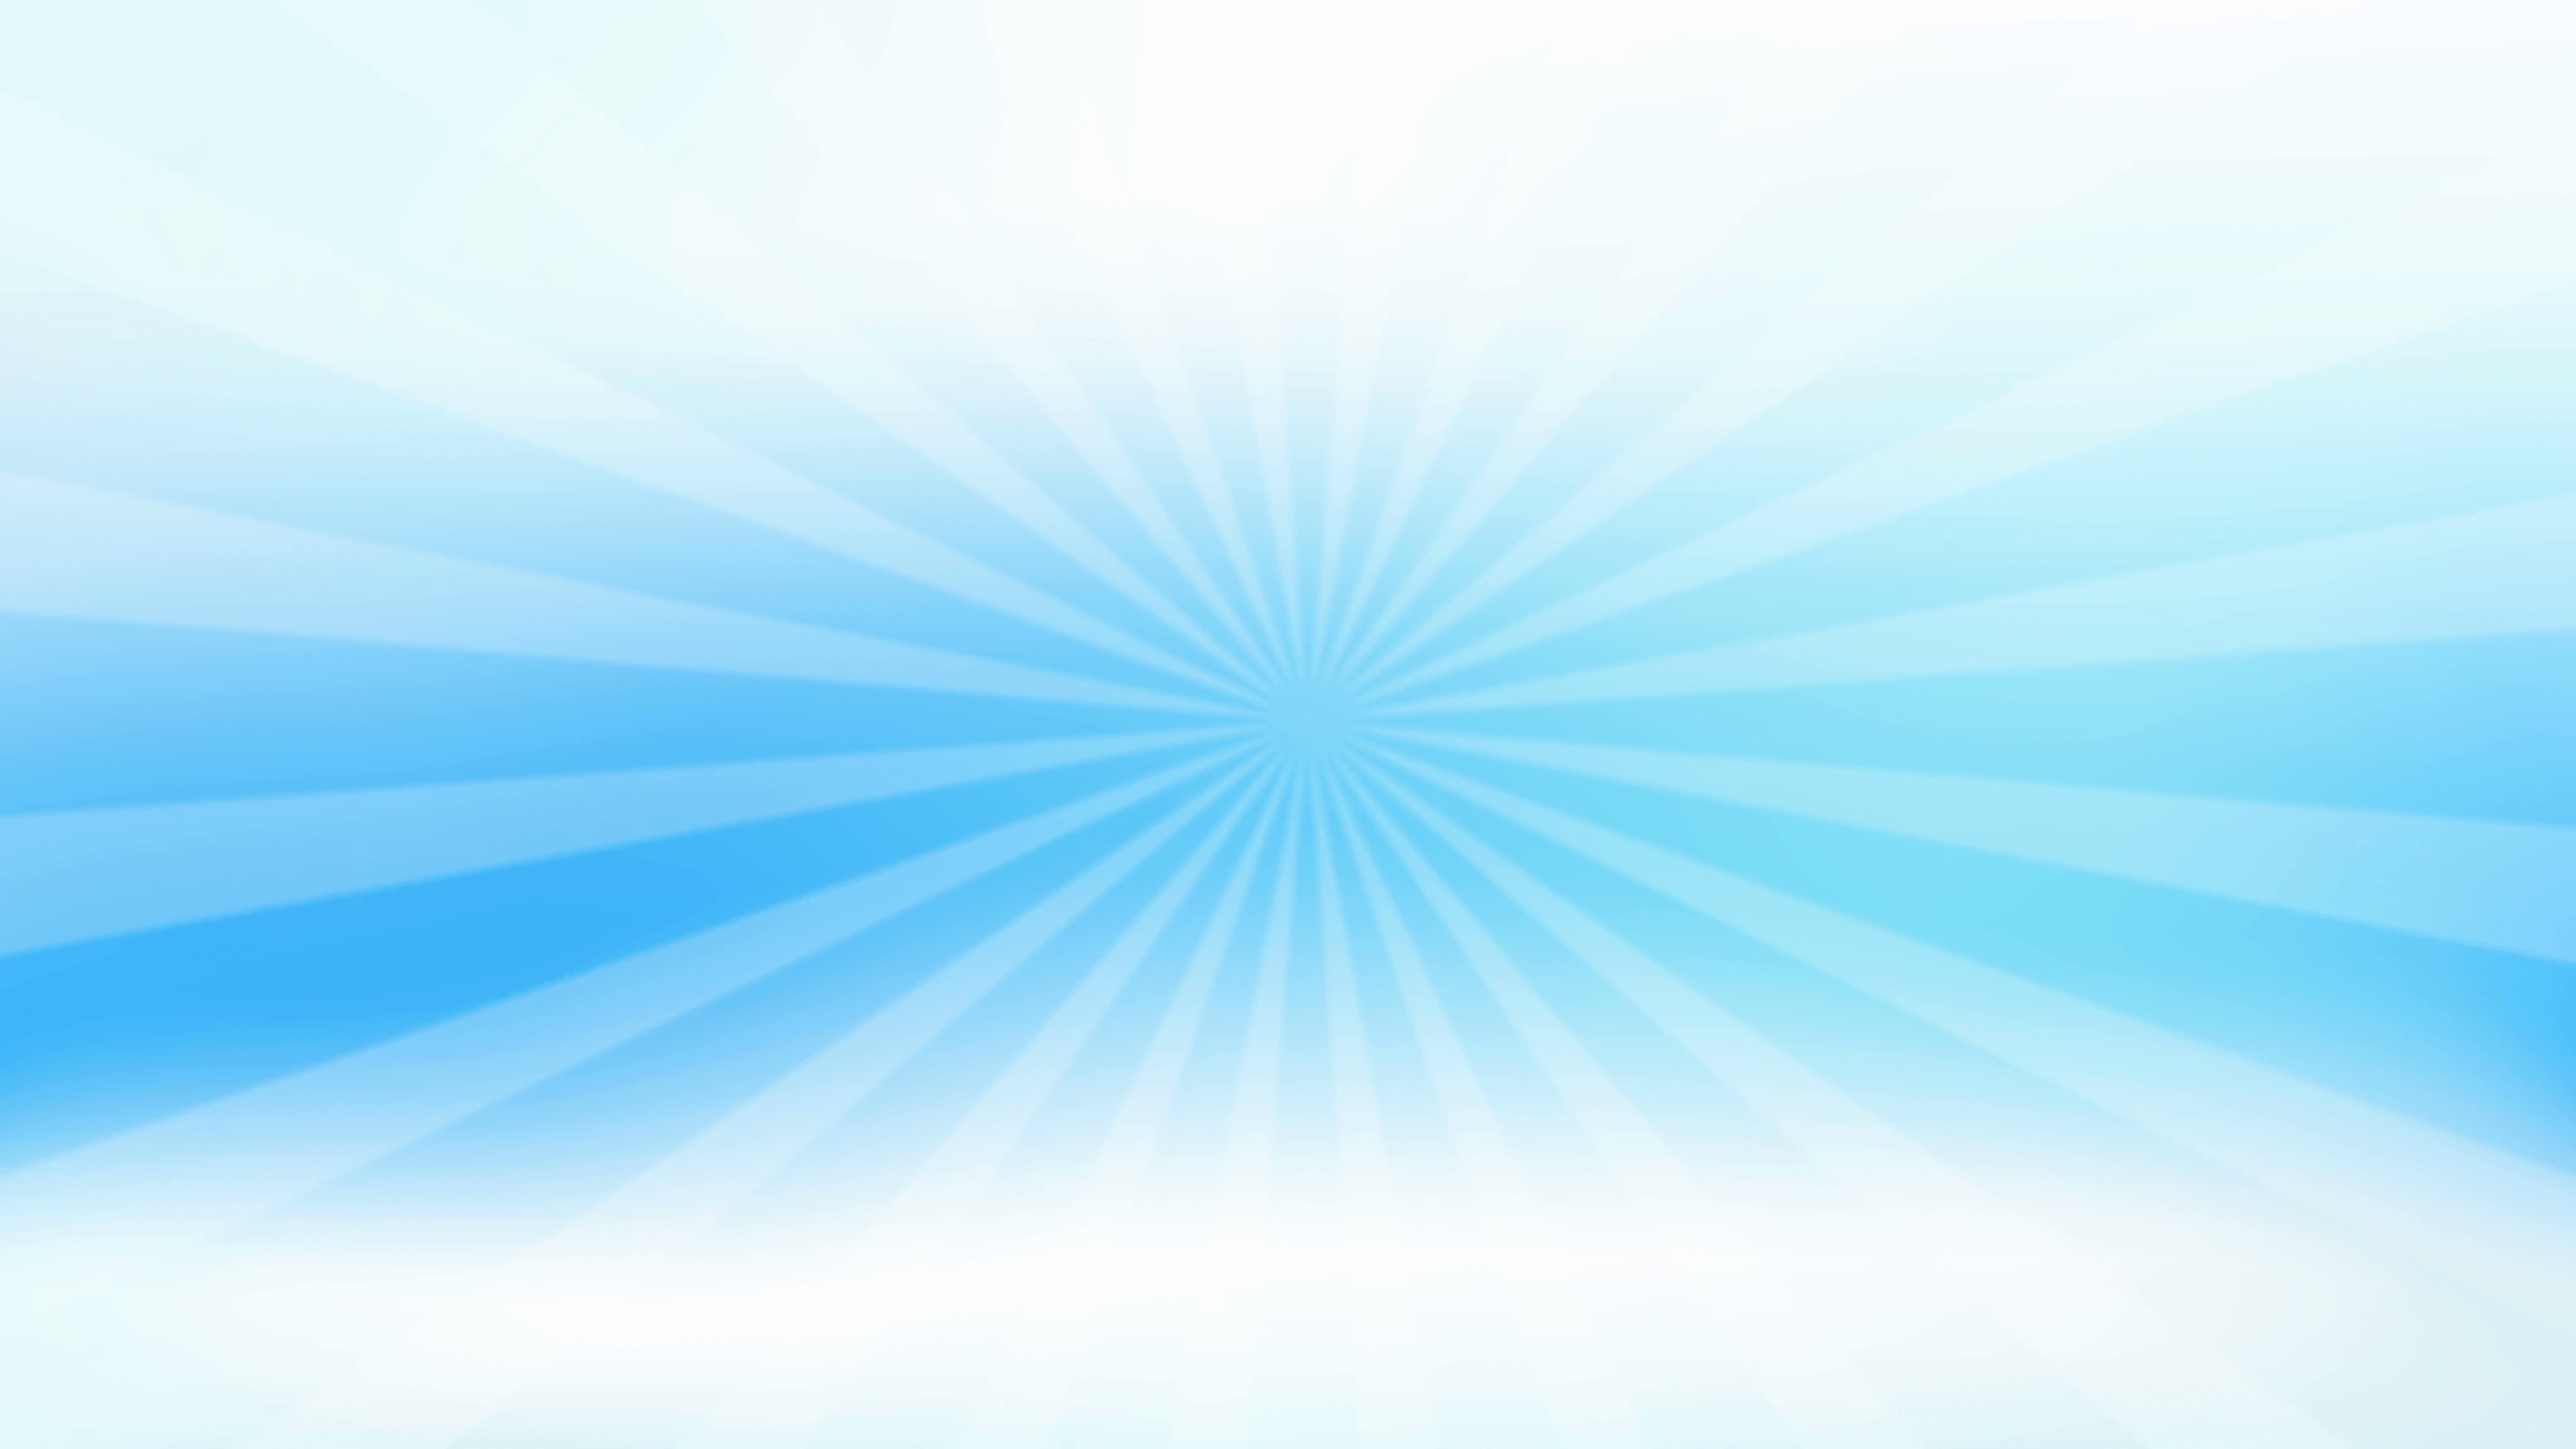 Abstract sunburst on gradient blue sky background loop animation